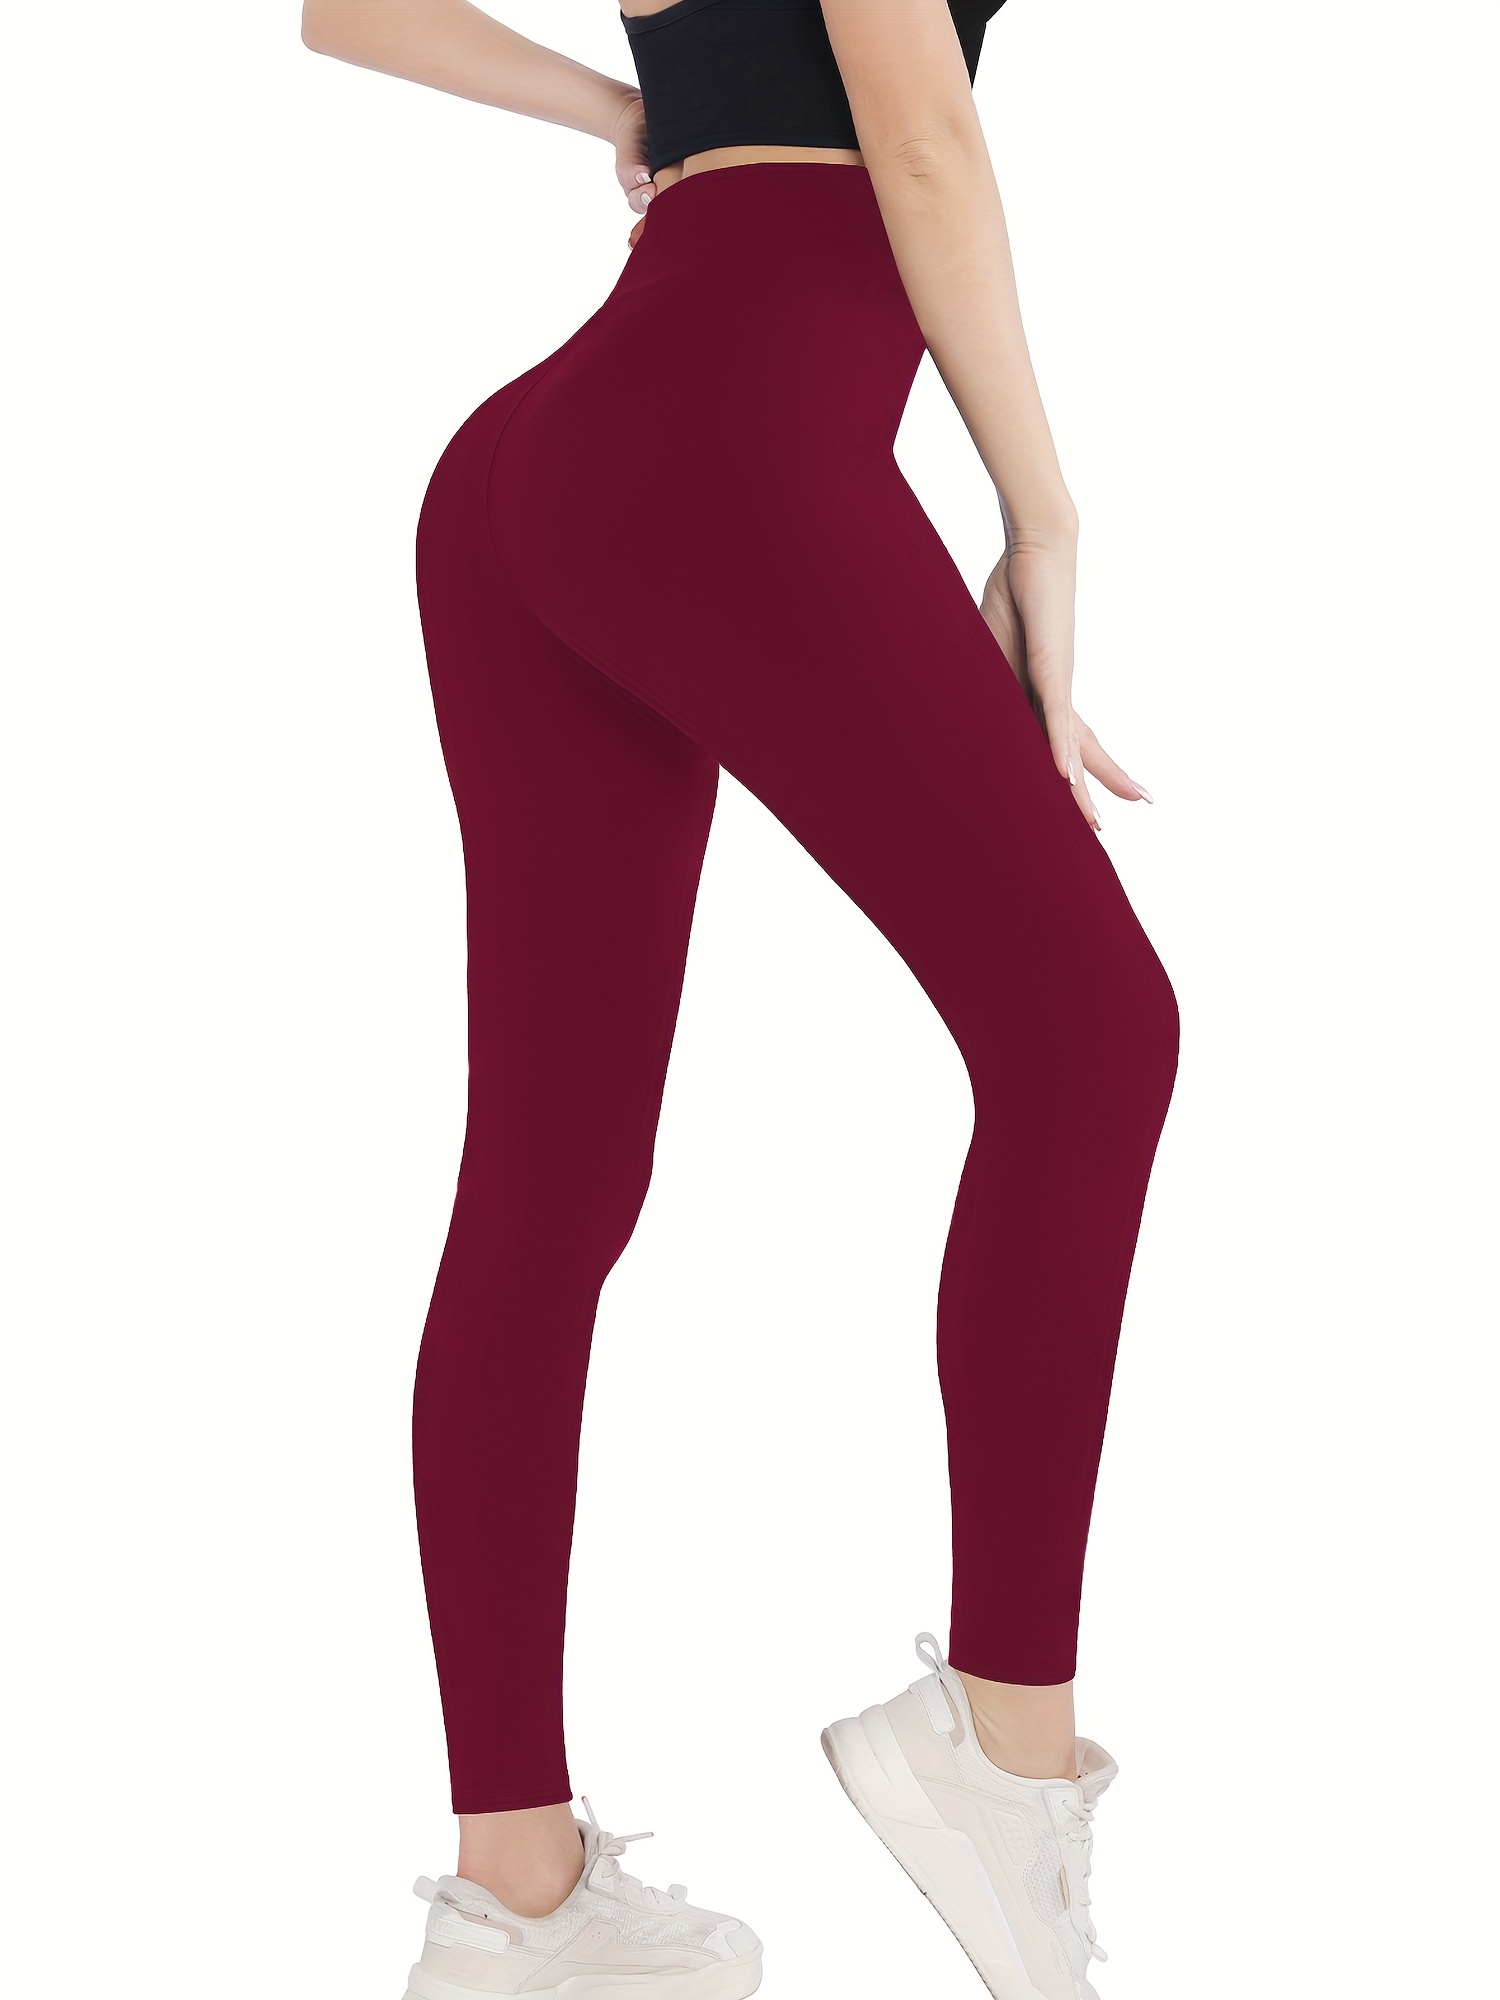 soild skinny stretchy leggings high waist workout casual leggings womens clothing